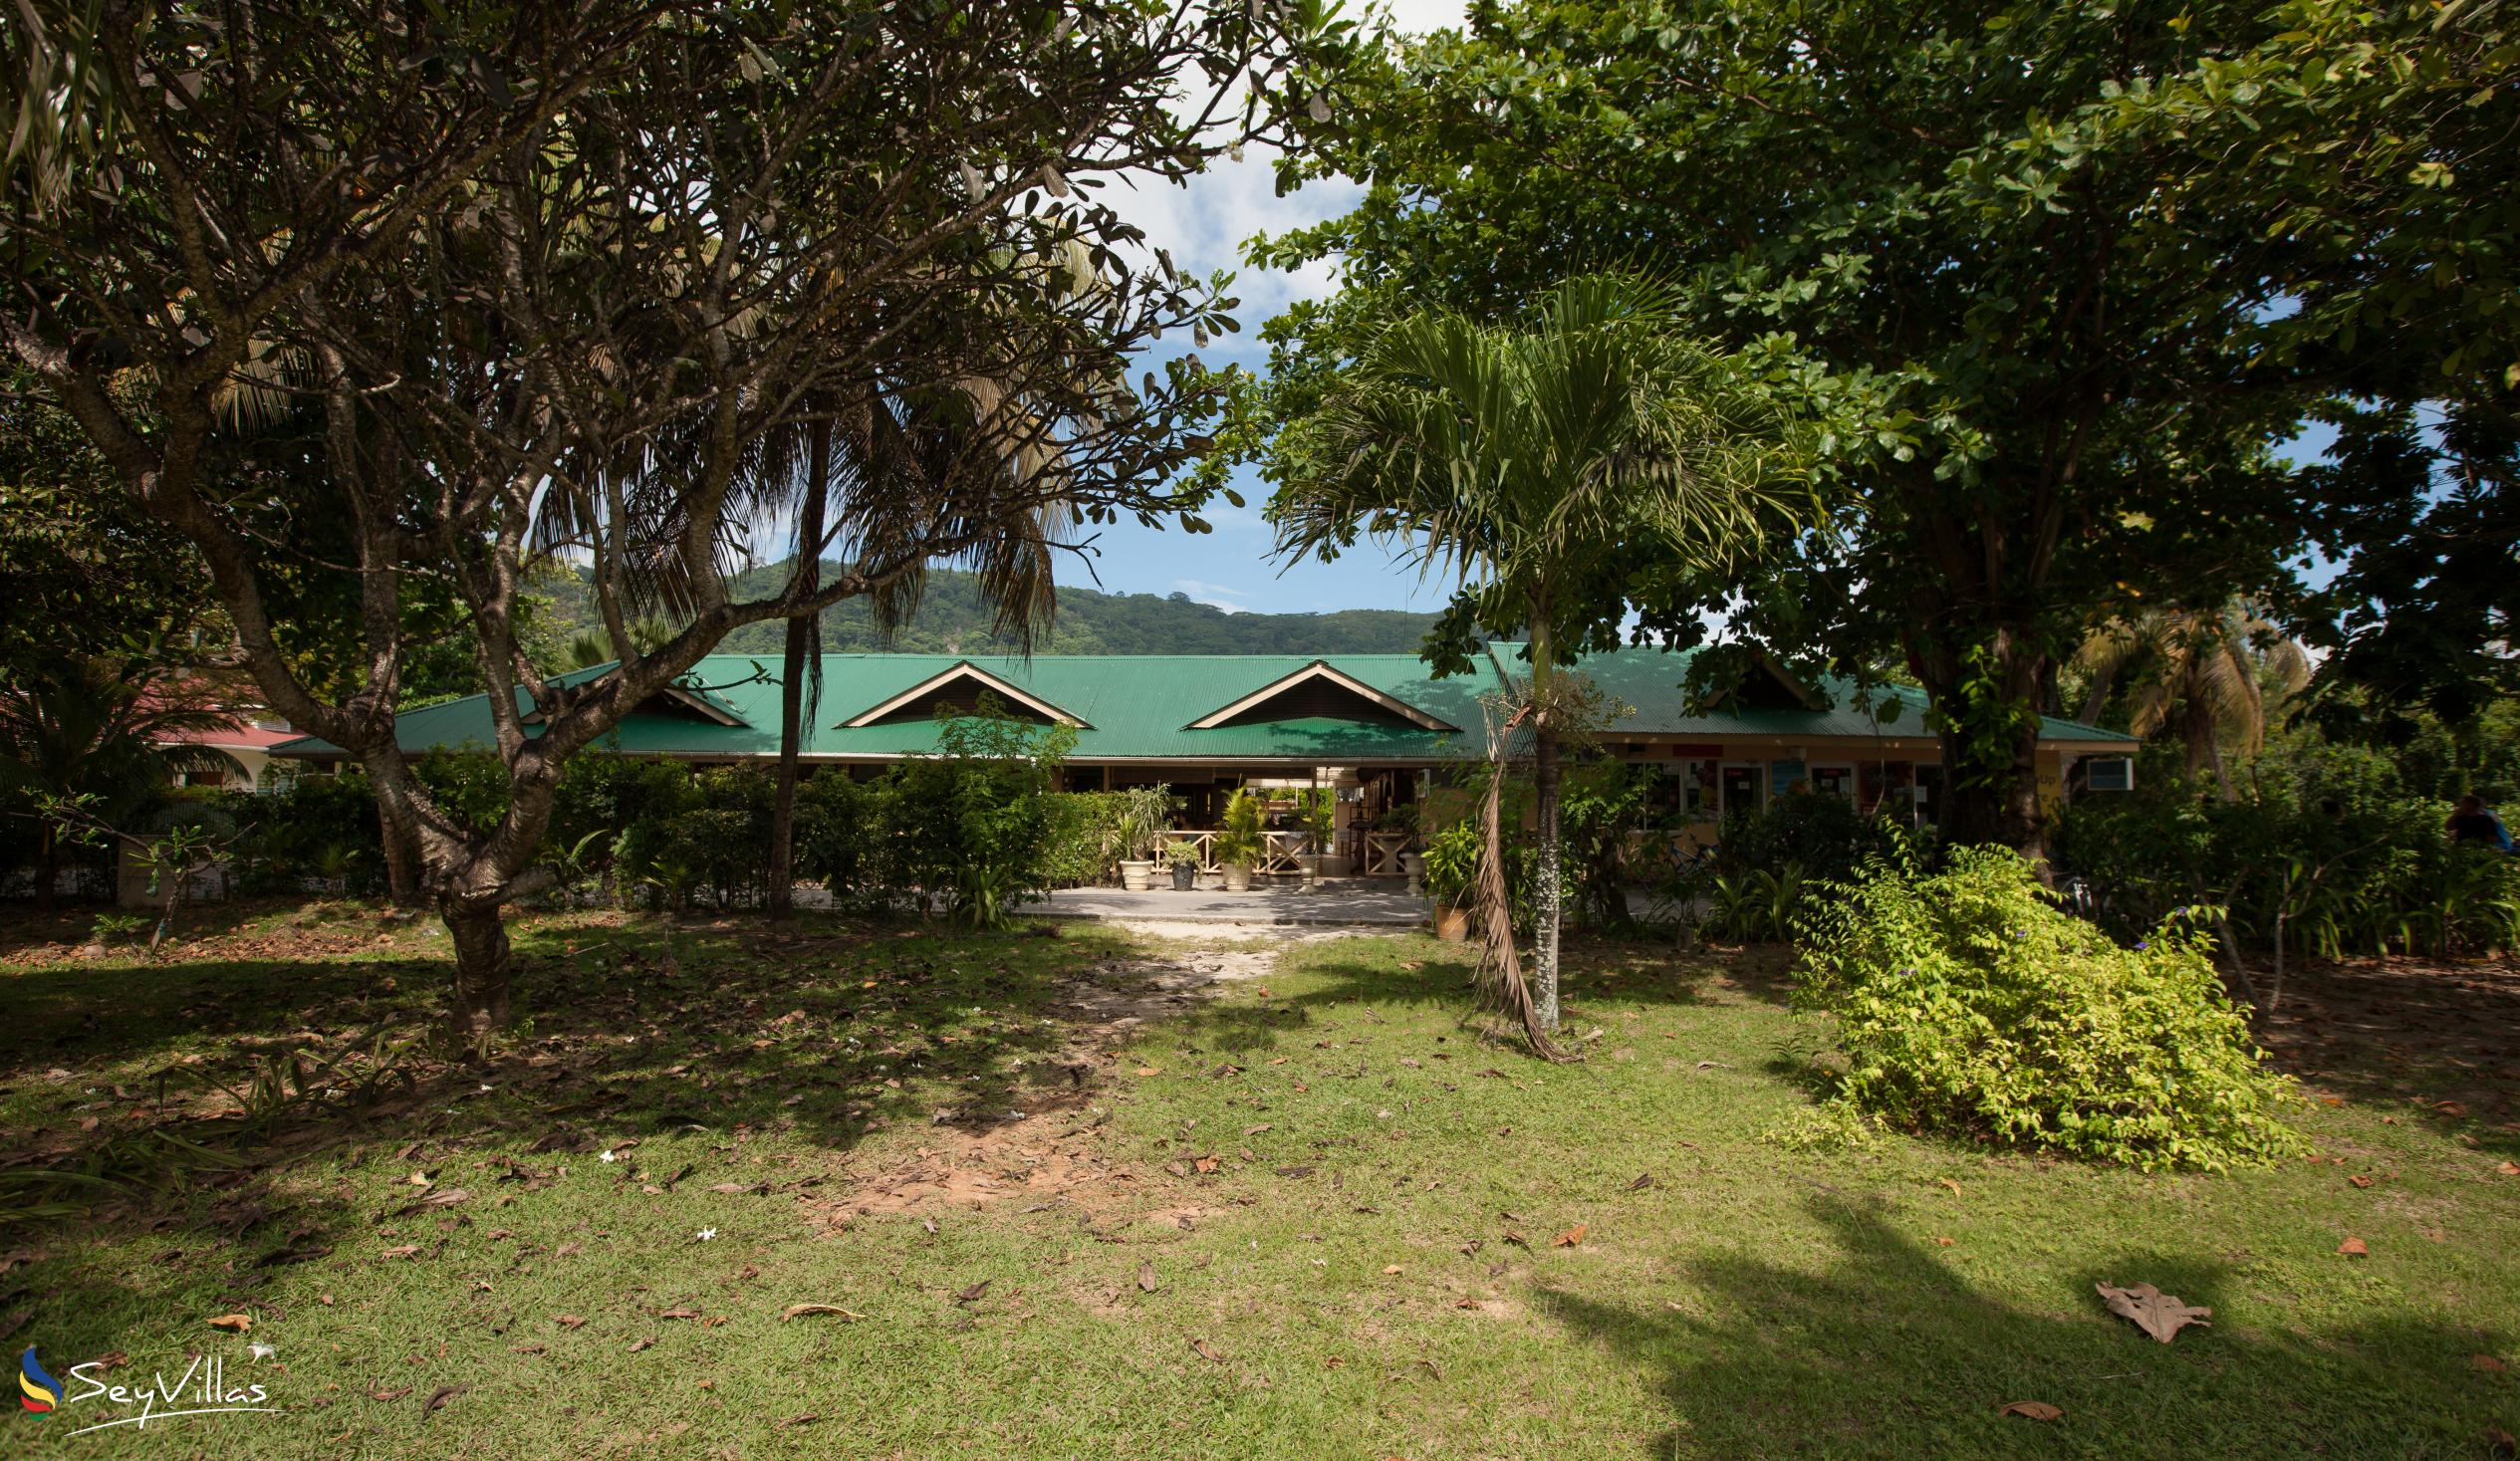 Photo 13: Chez Marston - Outdoor area - La Digue (Seychelles)